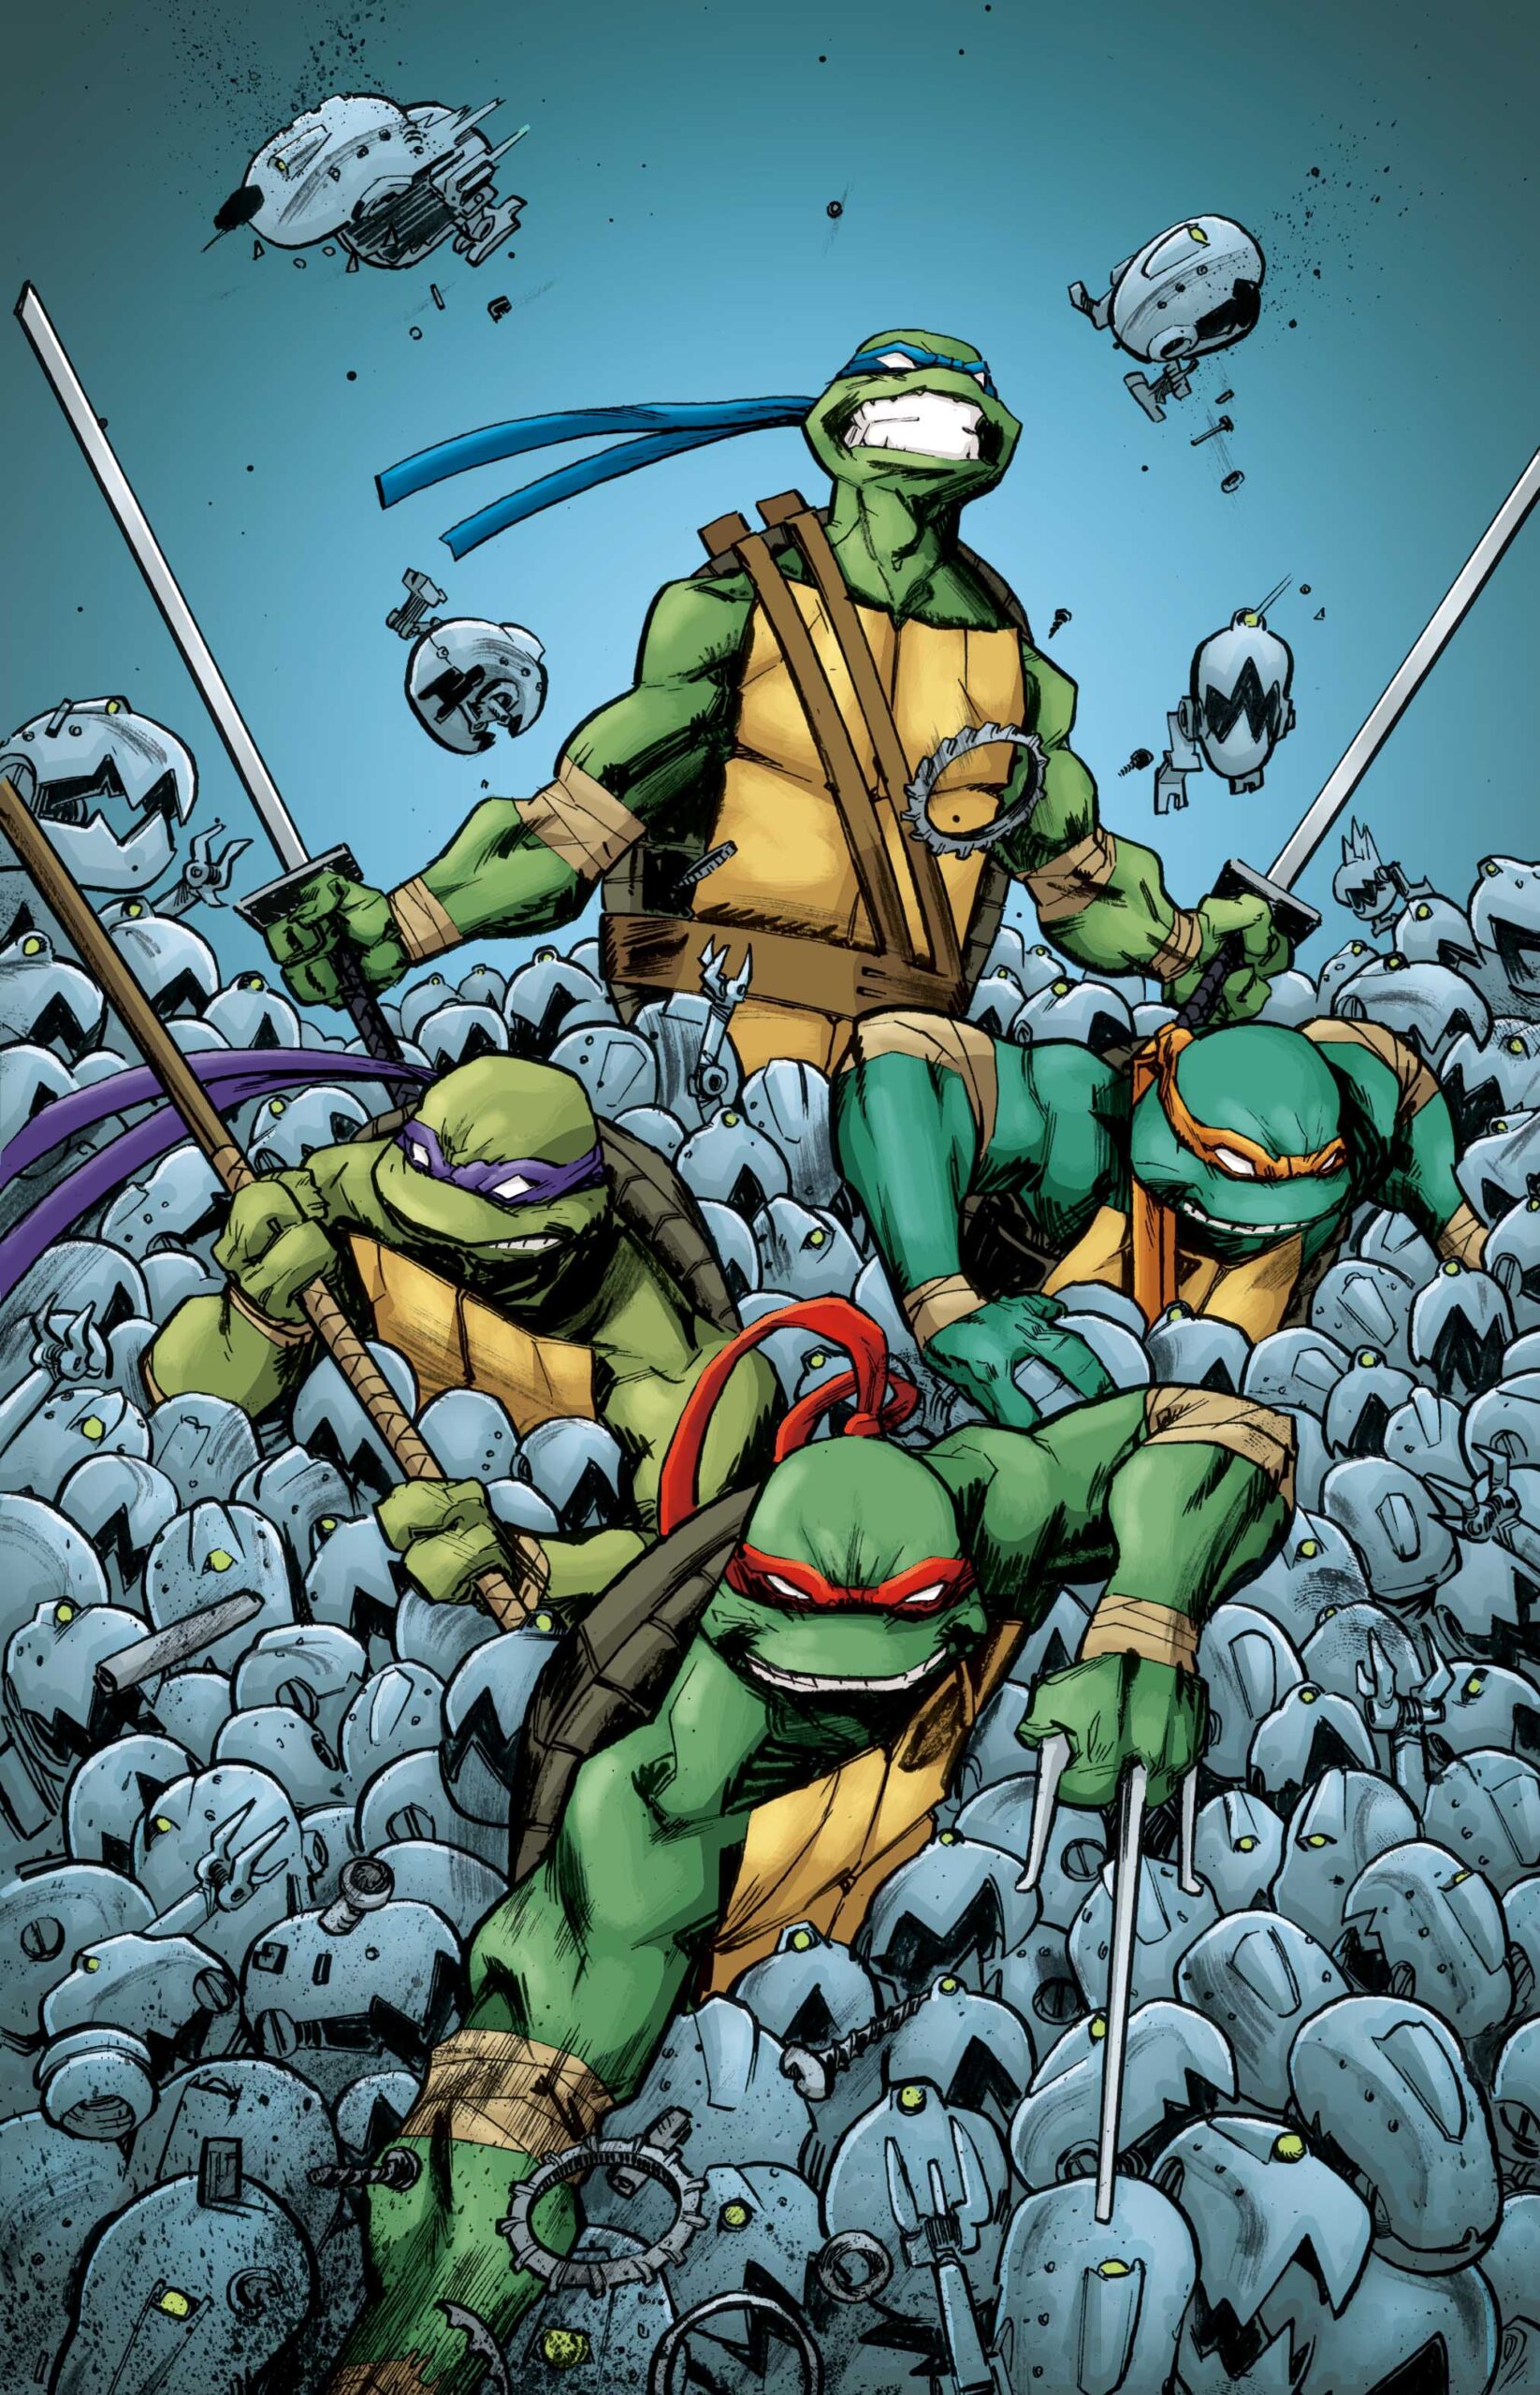 Background Ninja Turtles Wallpaper